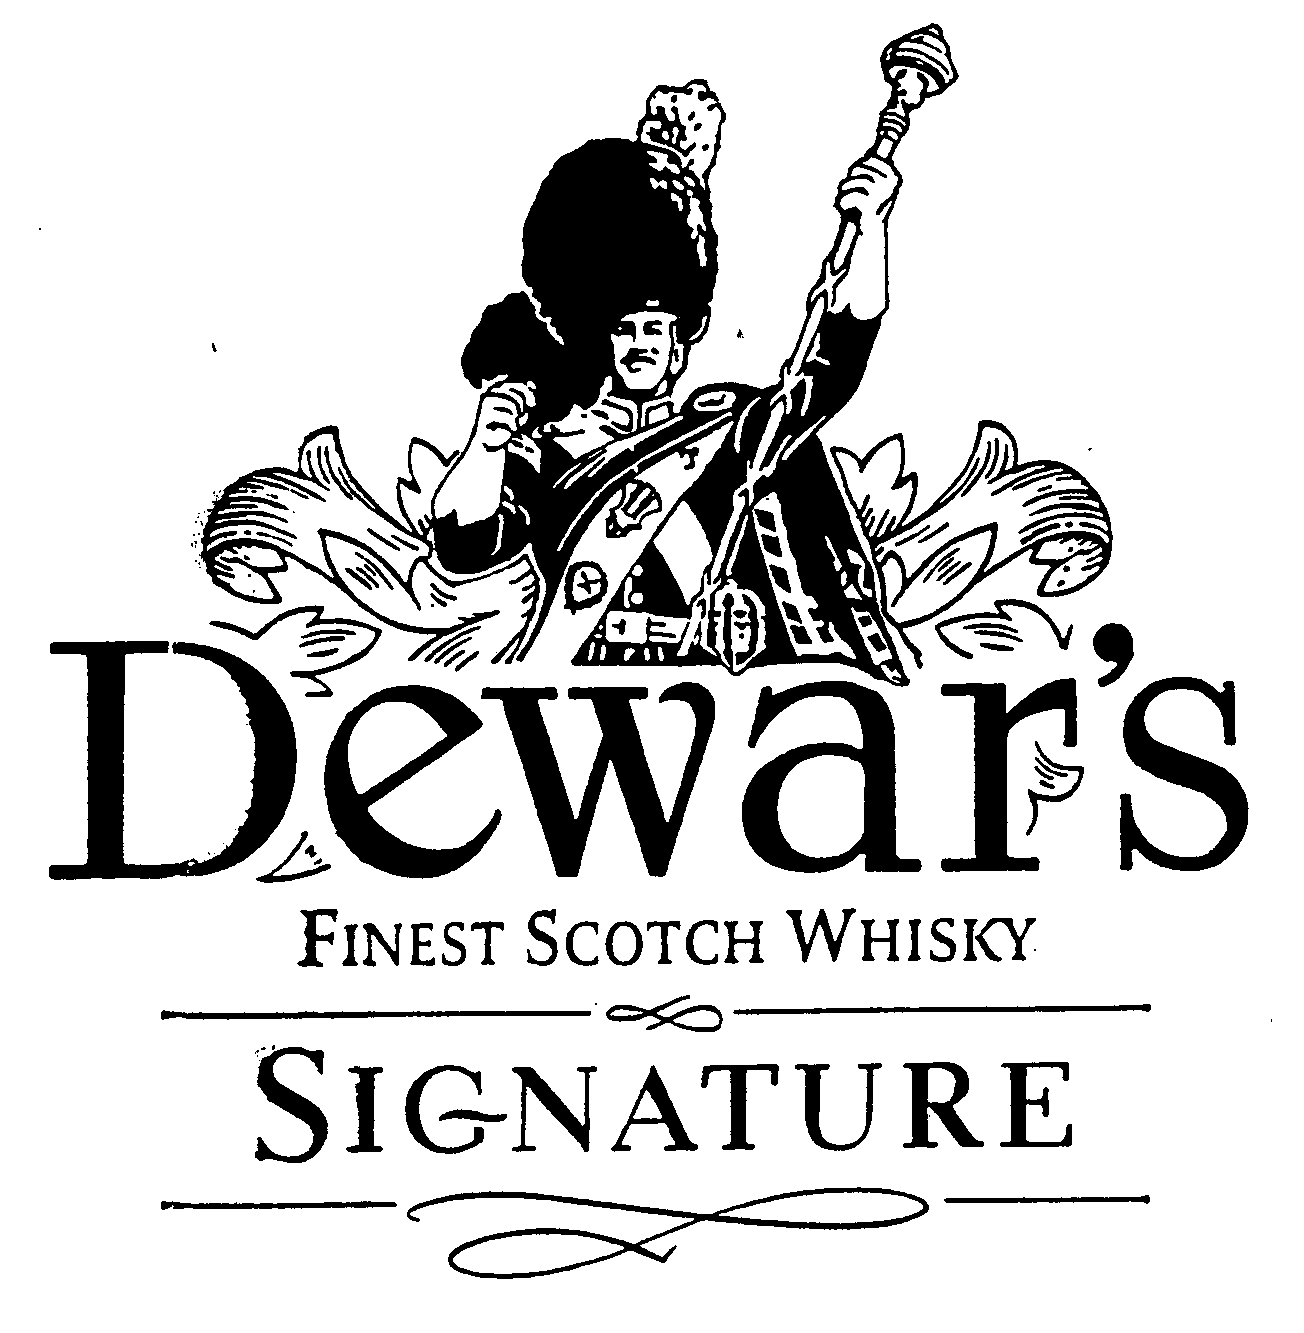  DEWAR'S FINEST SCOTCH WHISKY SIGNATURE